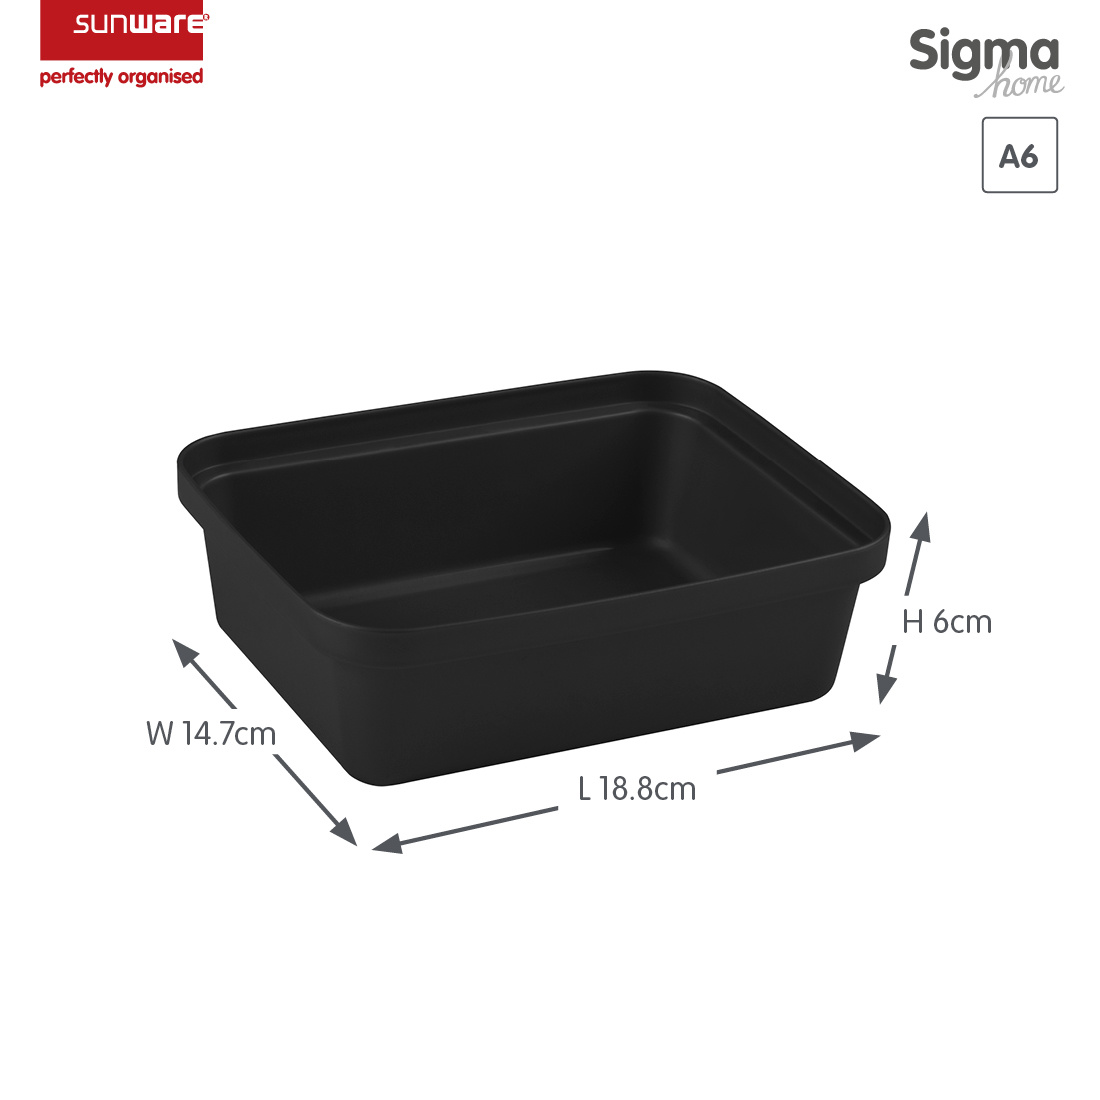  Sigma home Vielzweckkorb A6 schwarz aus recyceltem Material 